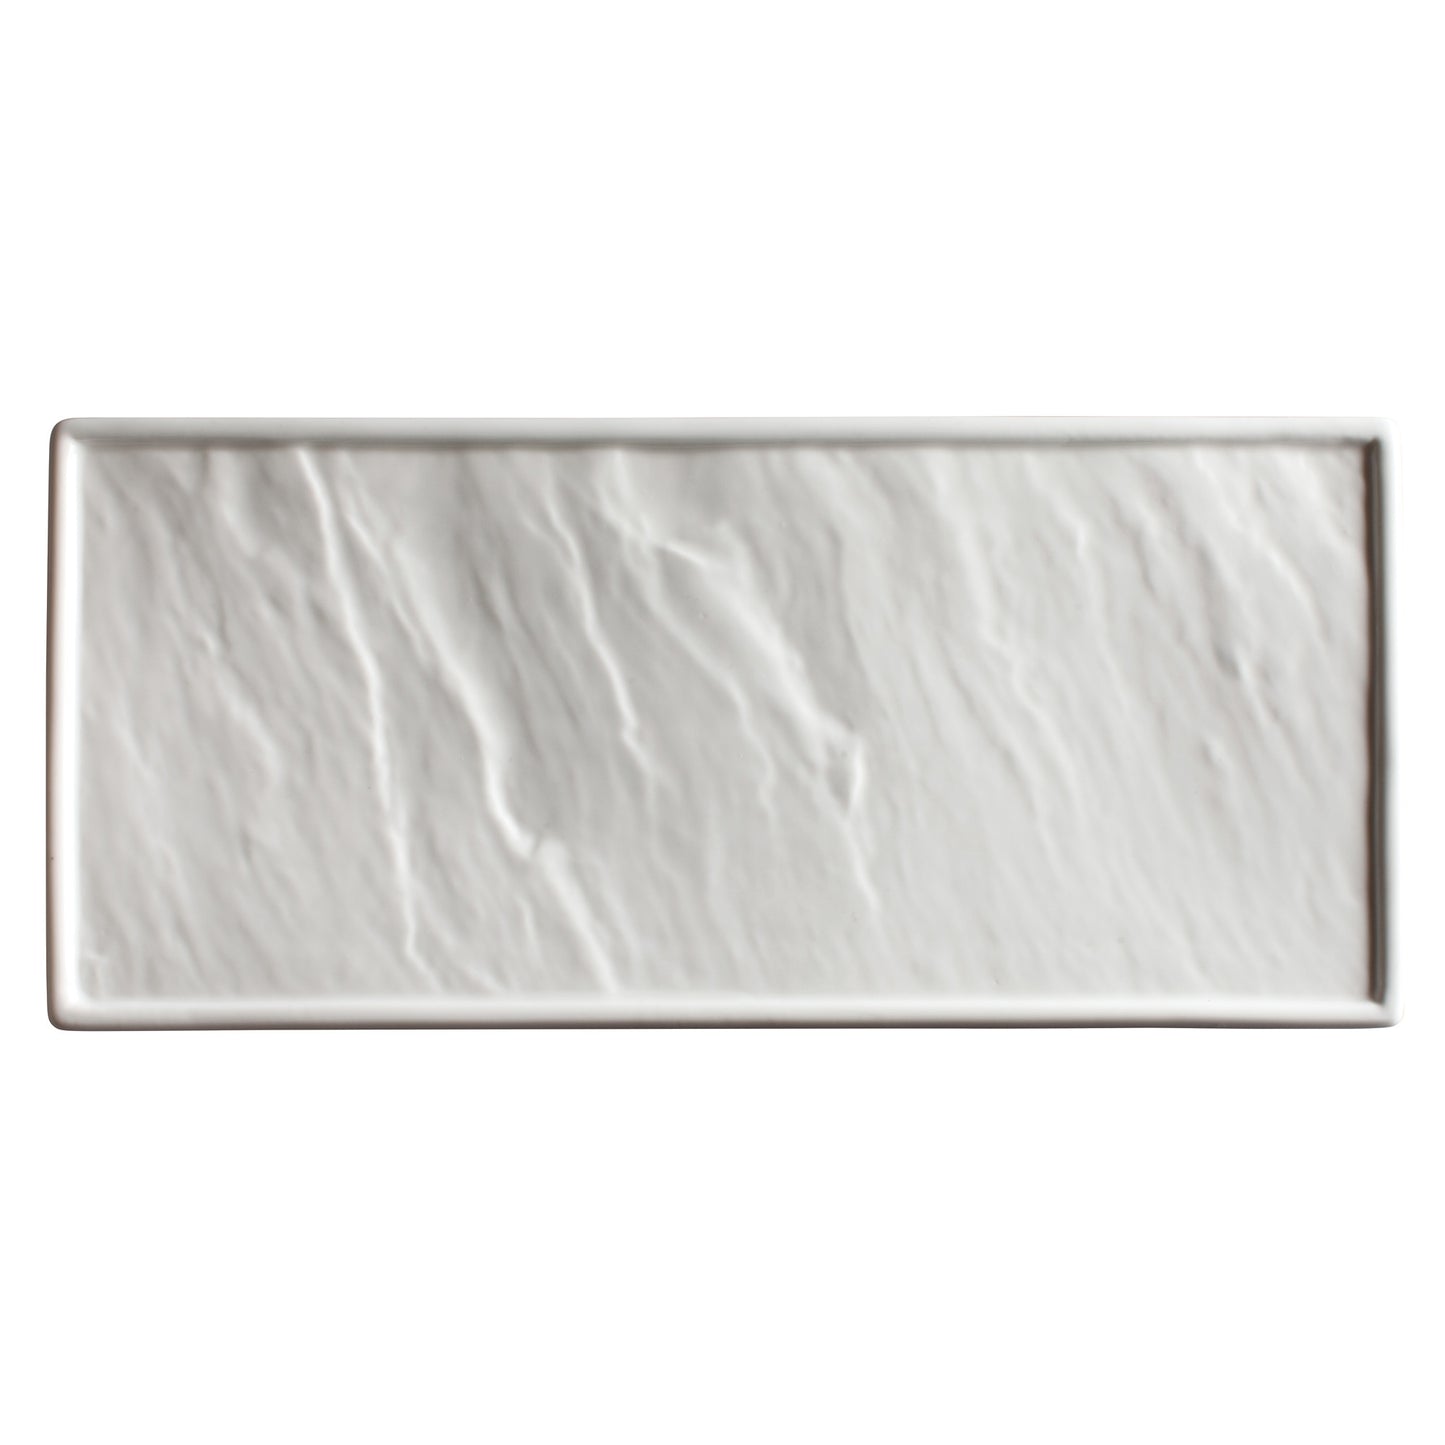 WDP001-204 - Calacatta Porcelain Rectangular Platter, Creamy White - 16-1/2"